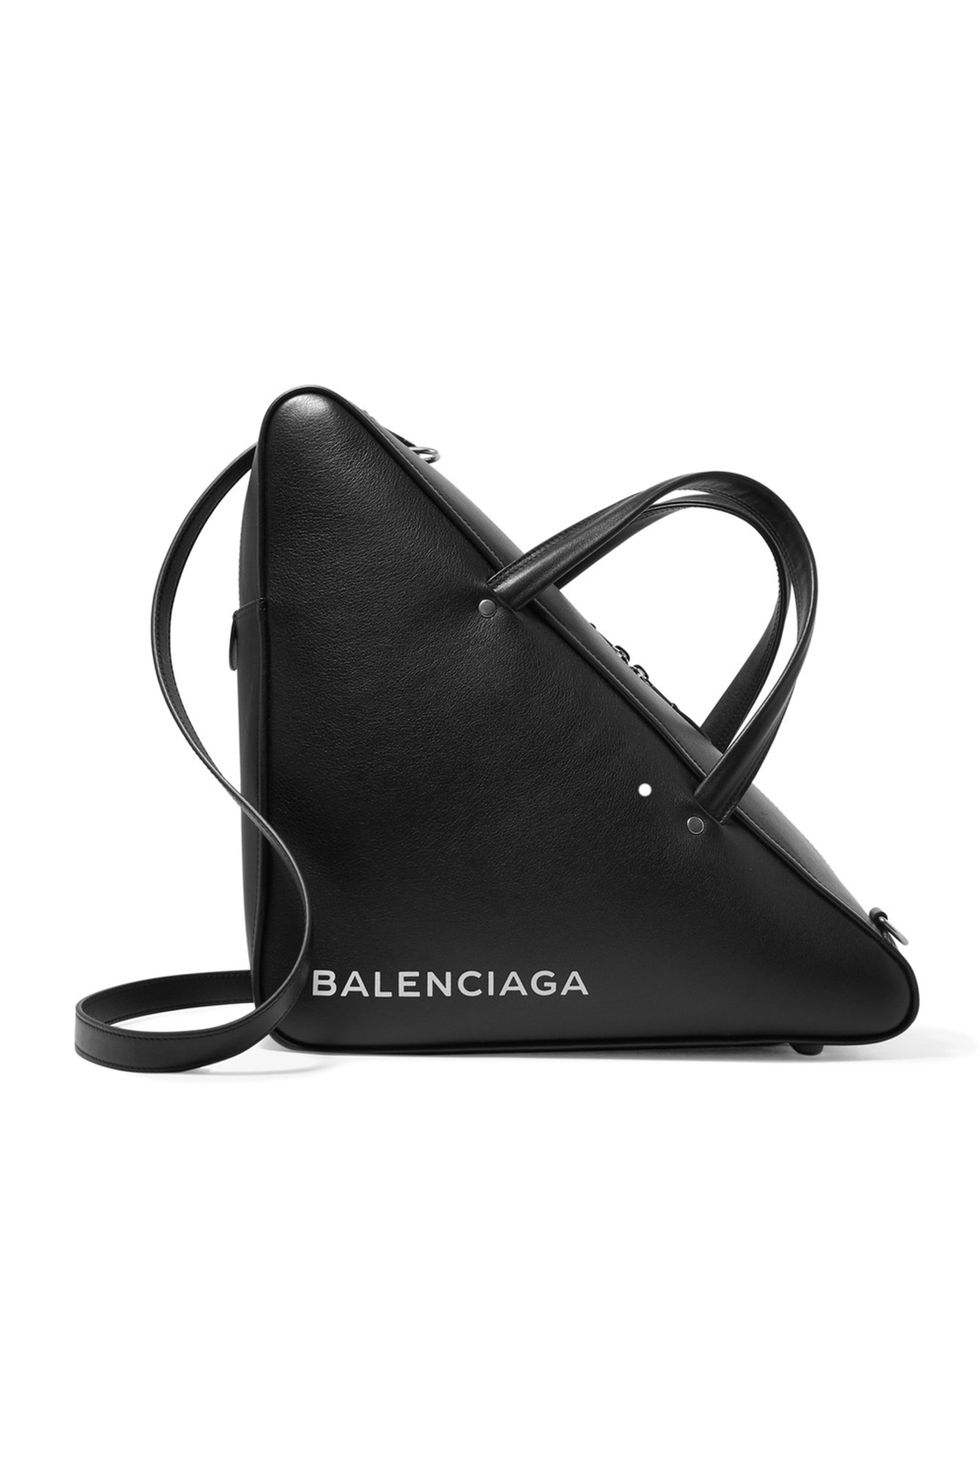 Bag, Handbag, Leather, Product, Fashion accessory, Messenger bag, Satchel, Technology, Electronic device, Tote bag, 